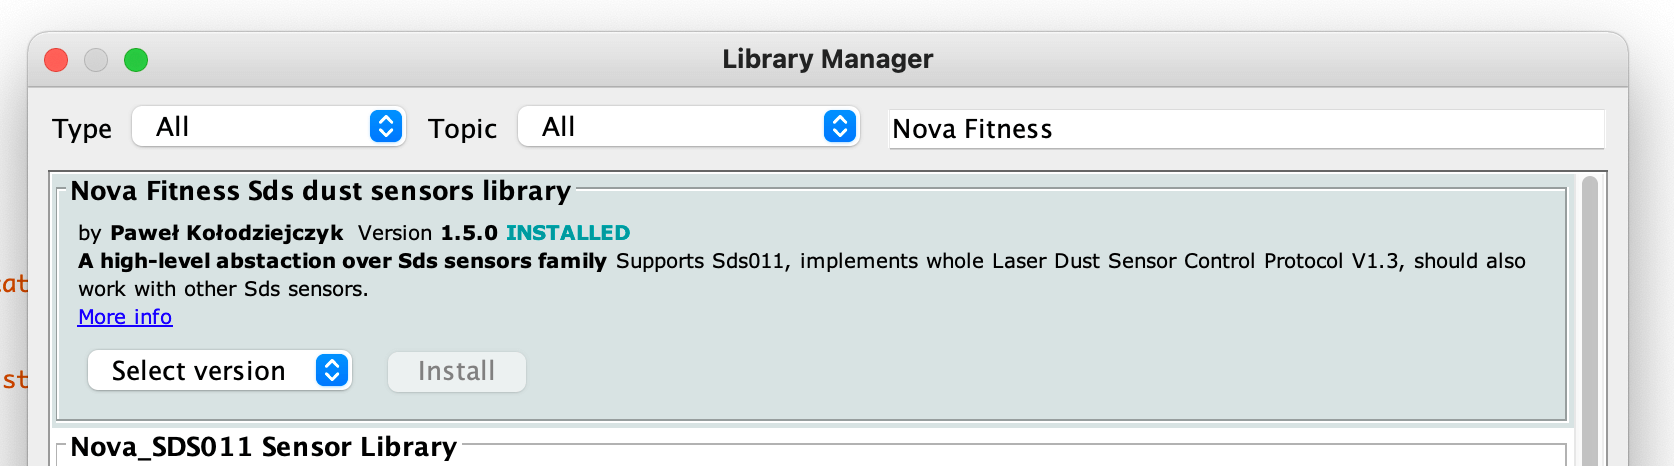 Nova Fitness SDS dust sensors library installation